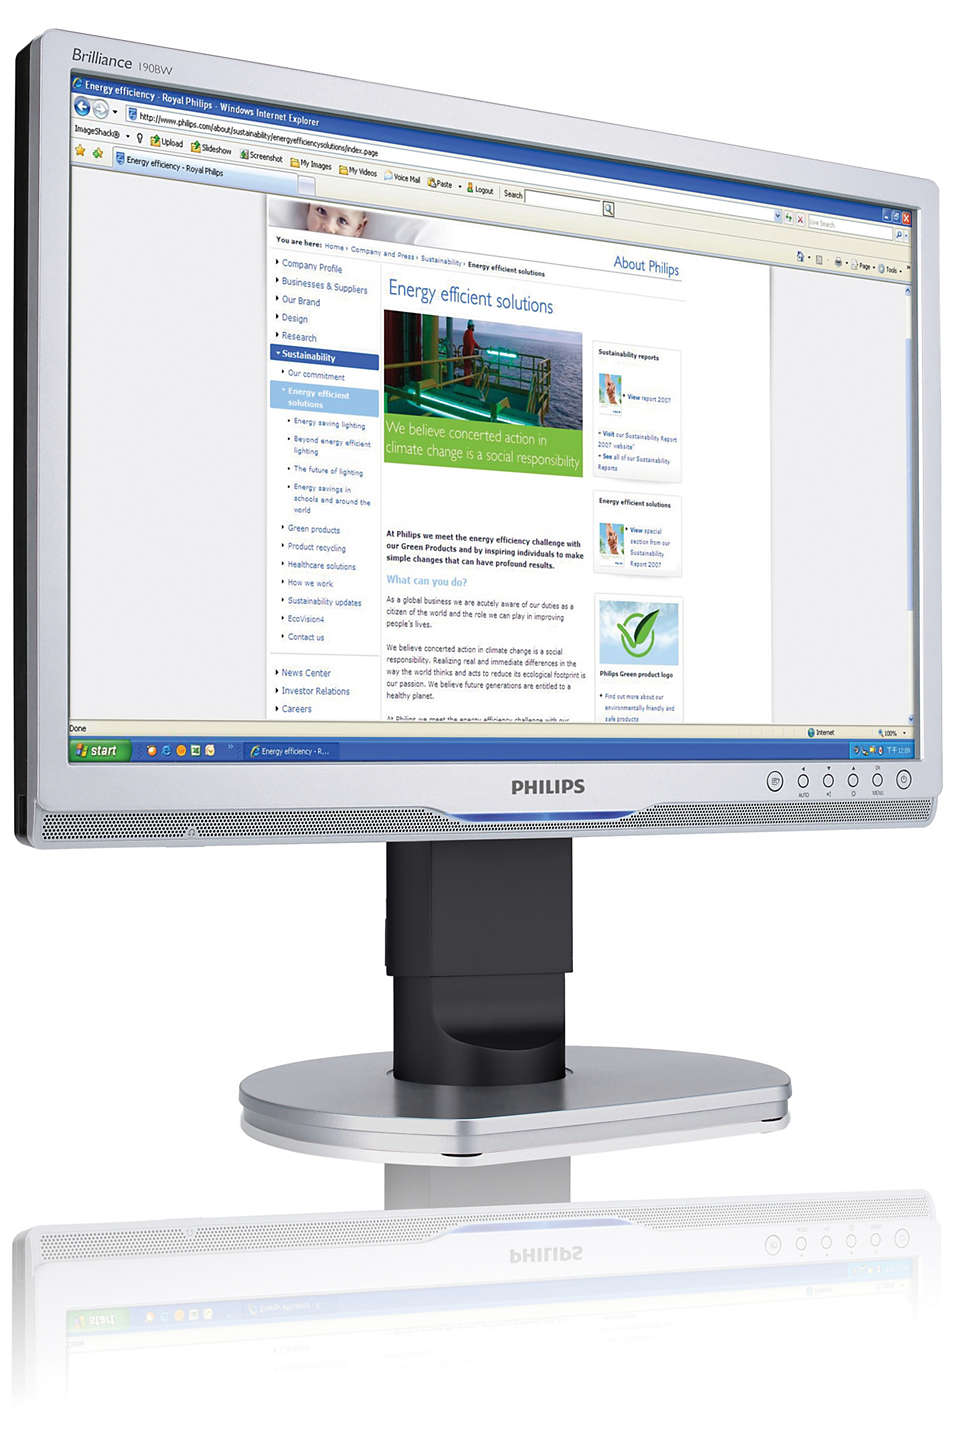 High resolution ergonomic widescreen for business